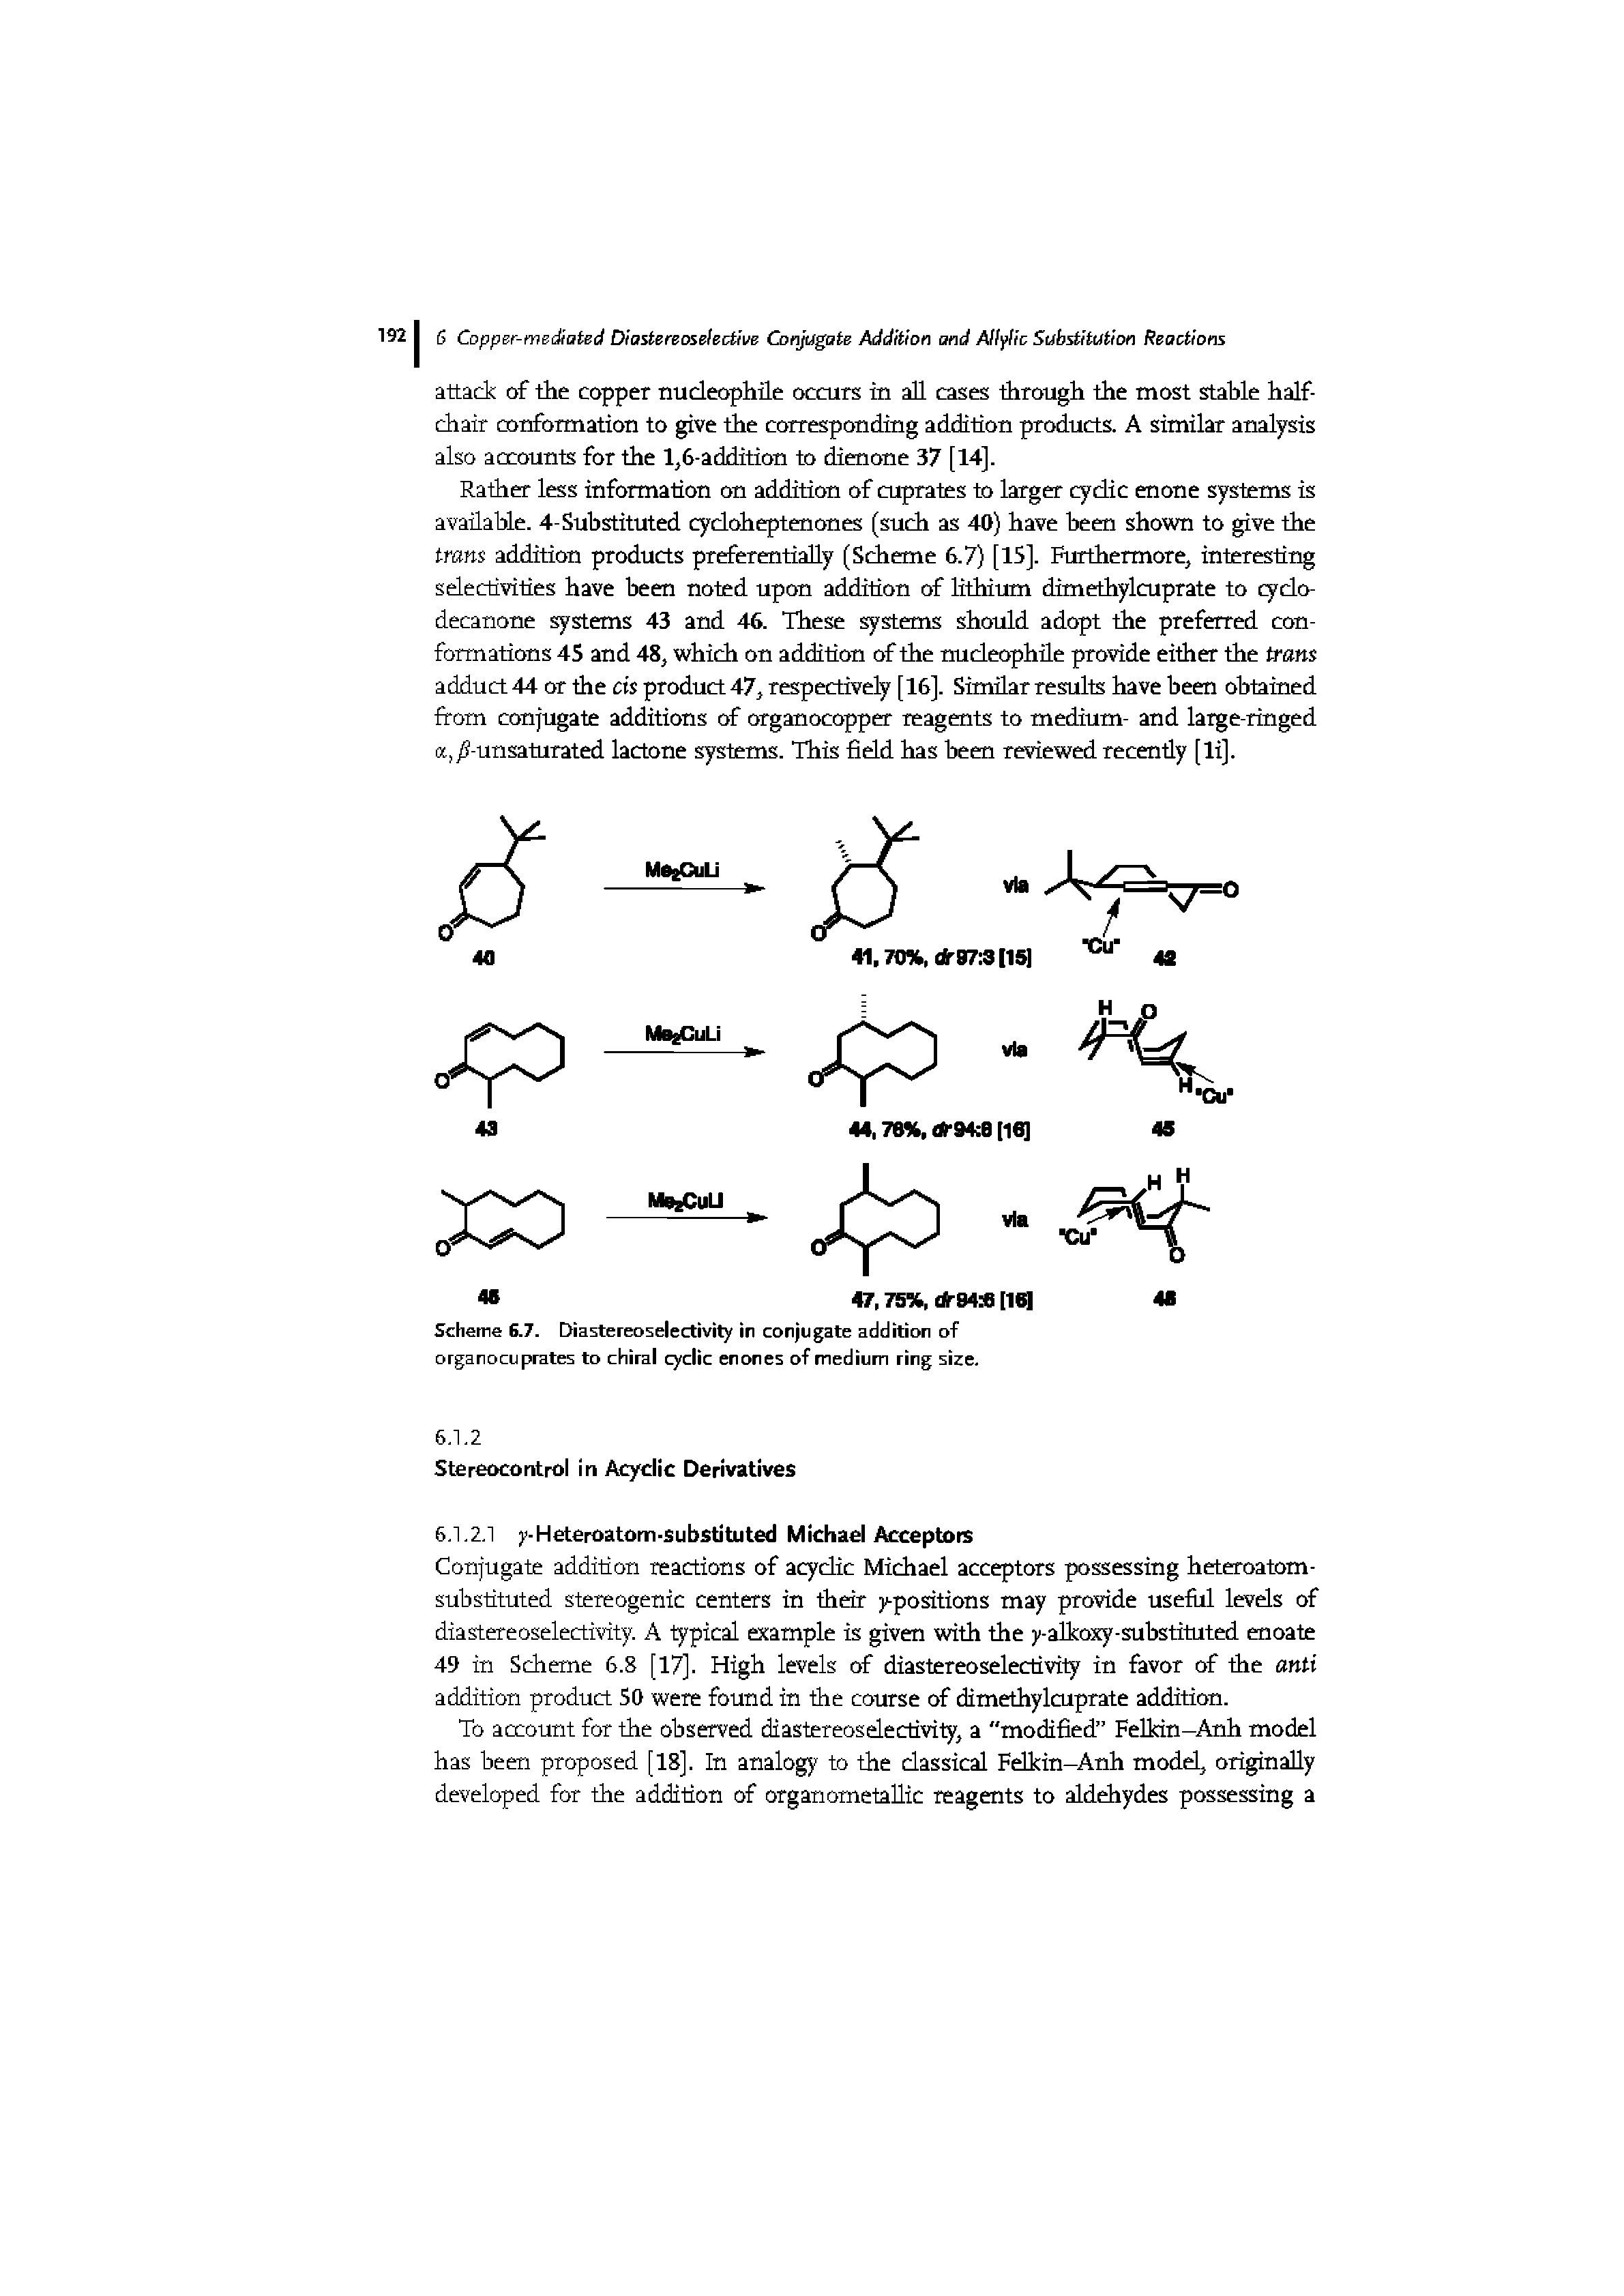 Scheme 6.7. Di a stereo selectivity in conjugate addition of orga no cuprates to chiral cyclic enones of medium ring size.